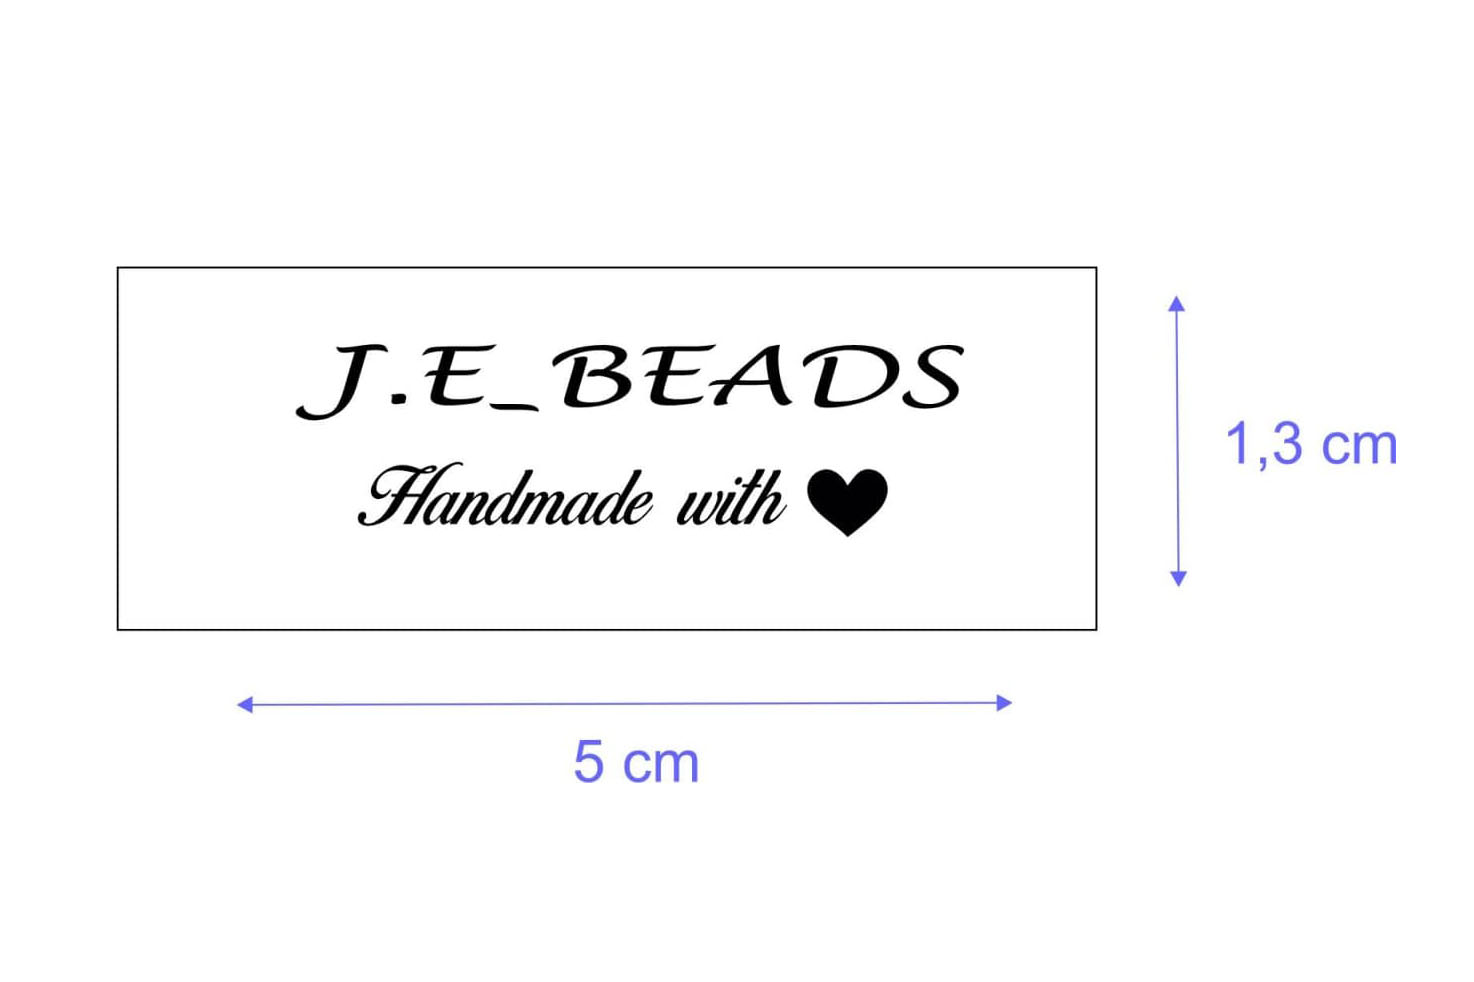 Desain Label Aksesoris Jebeads